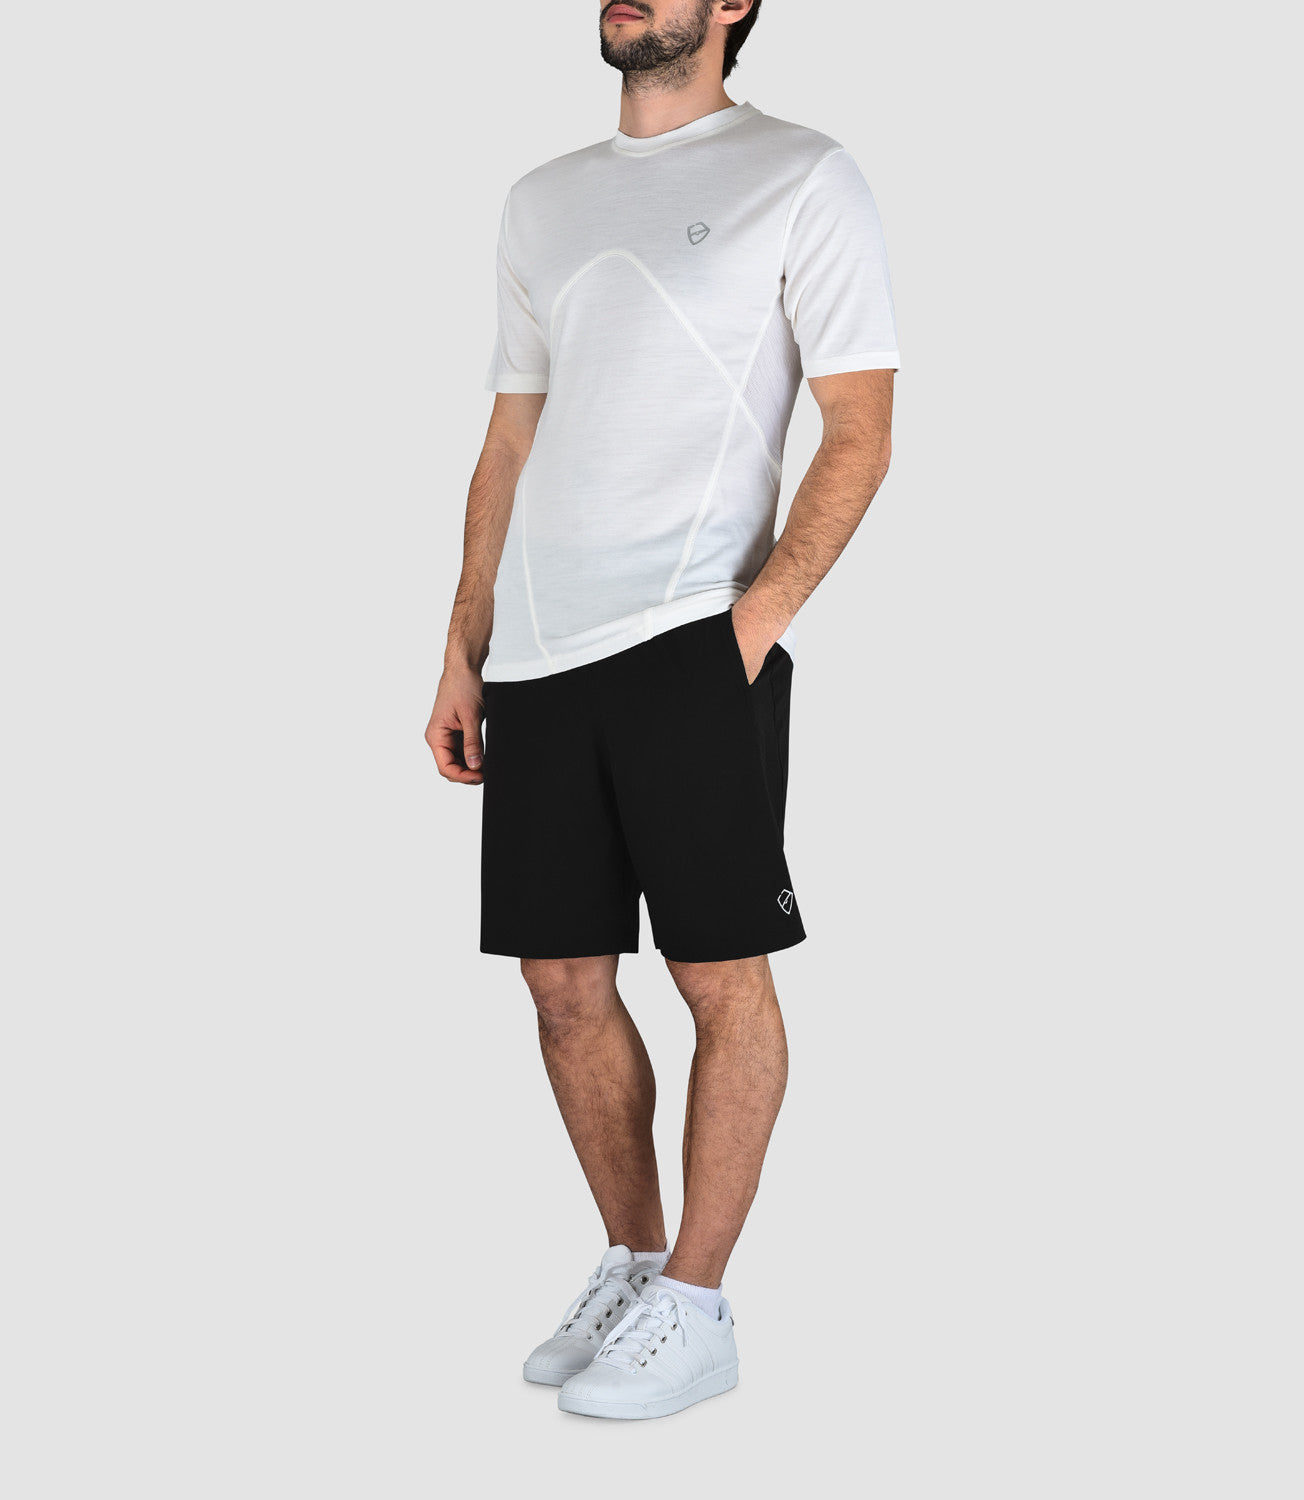 Men's Tops Tennis/Fitness/Golf Clothing -Kingsley Merino Wool Tee-PlayBrave-White-S-PlayBrave Sports UK